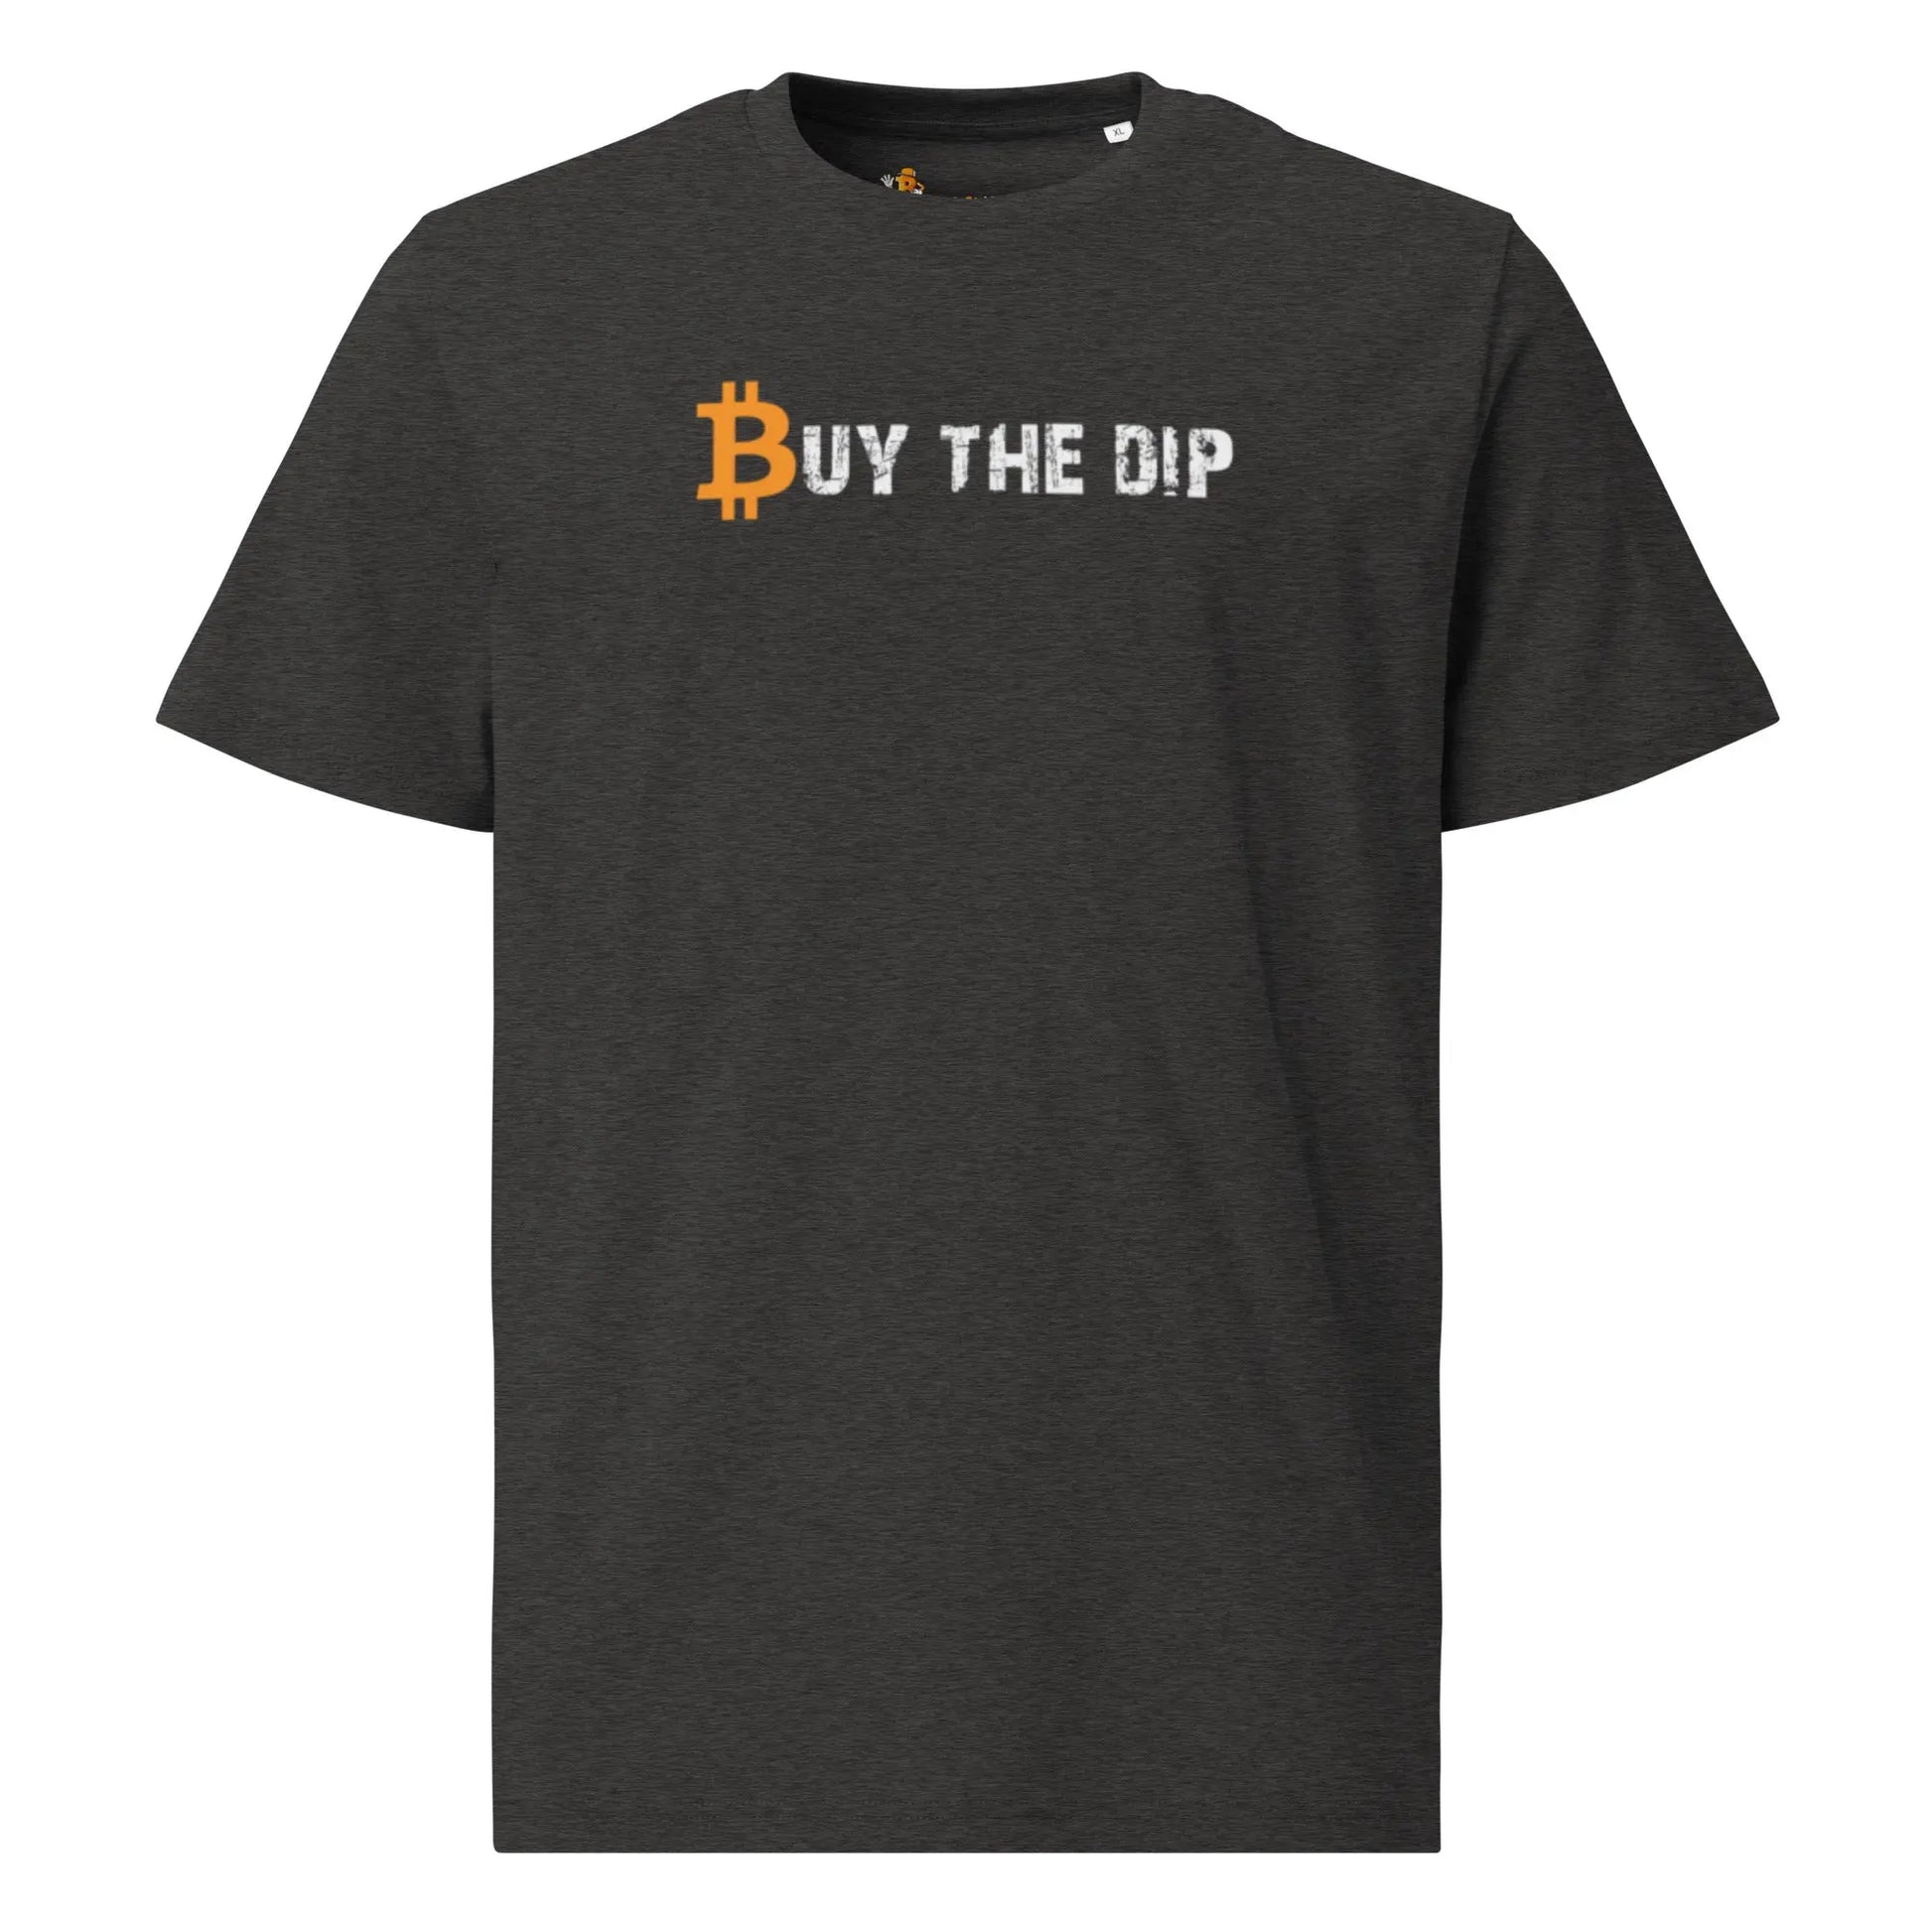 Buy The Dip - Premium Unisex Organic Cotton Bitcoin T-shirt Grey Color